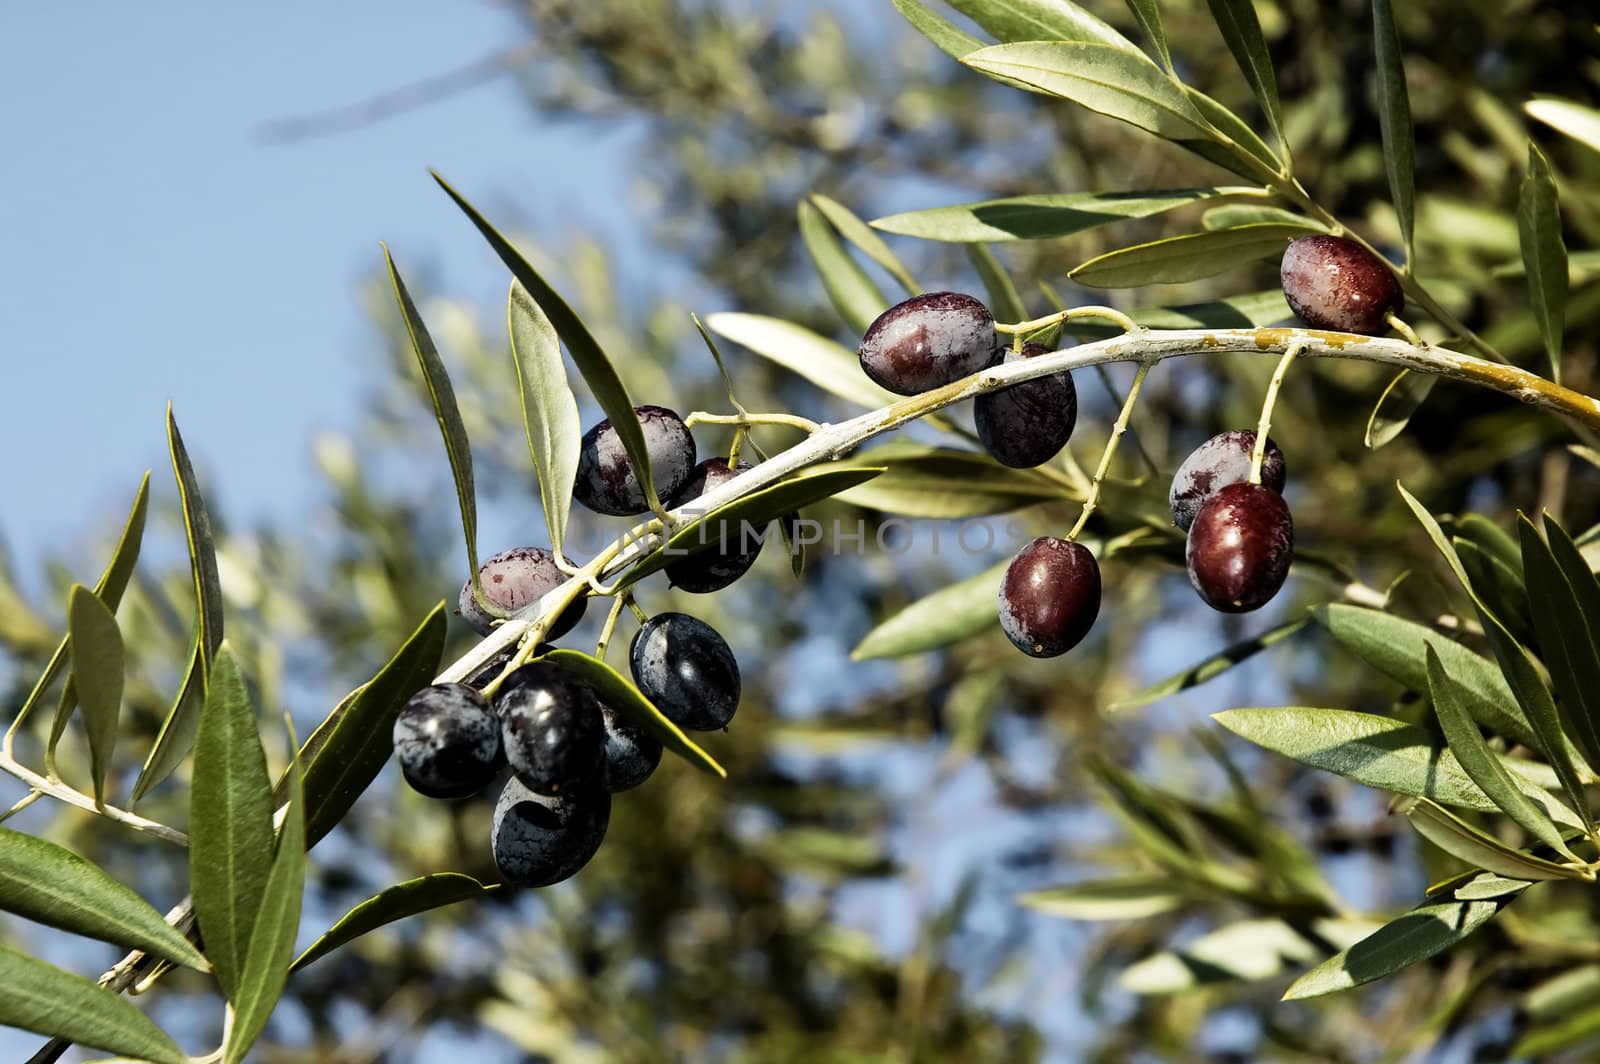 Olives by mrfotos